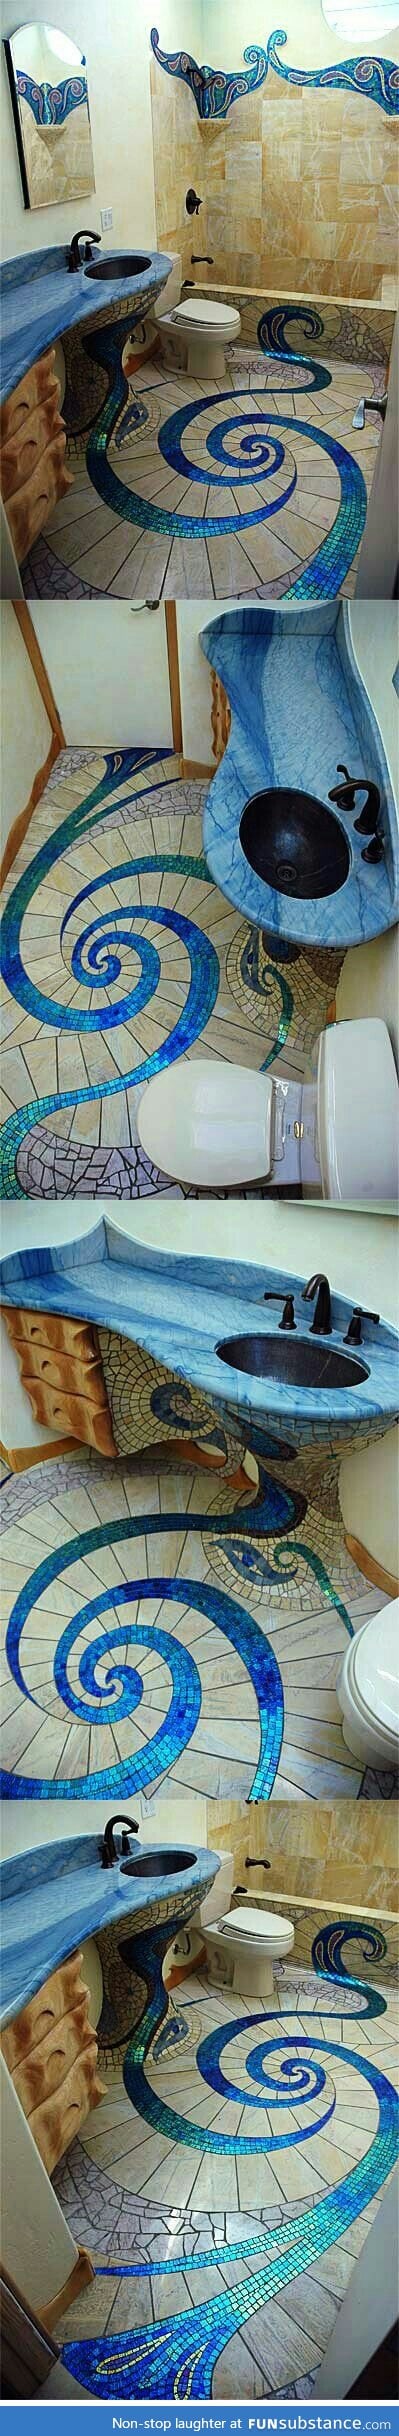 This bathroom is amazing